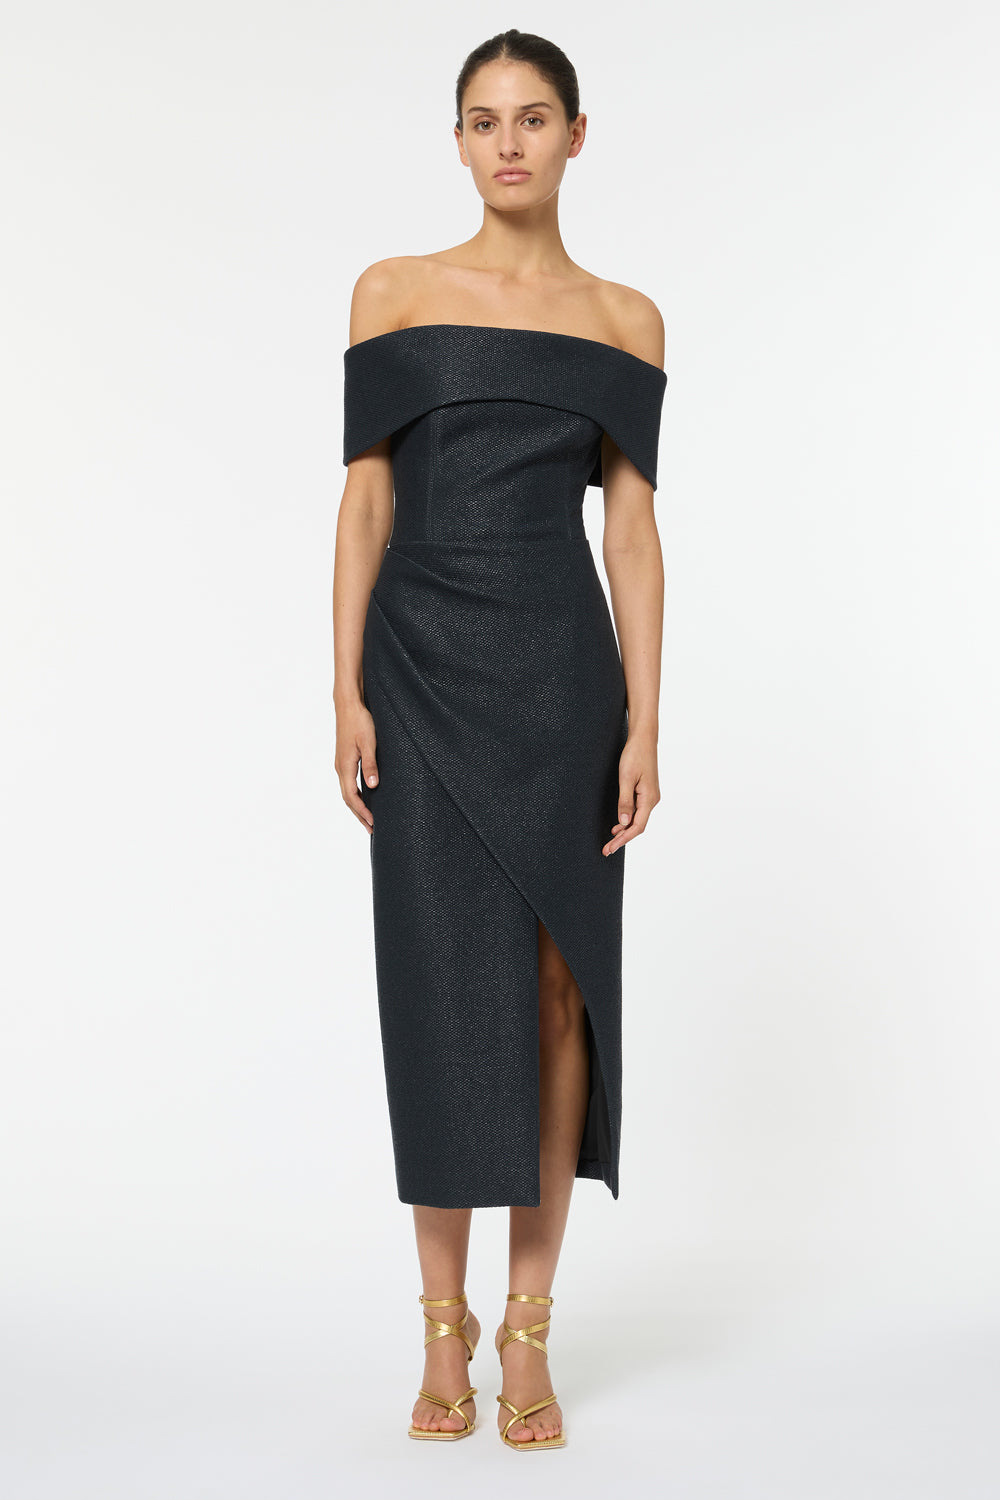 Manning Cartell - Miami Heat Asymmetric Dress Champagne (Size 12